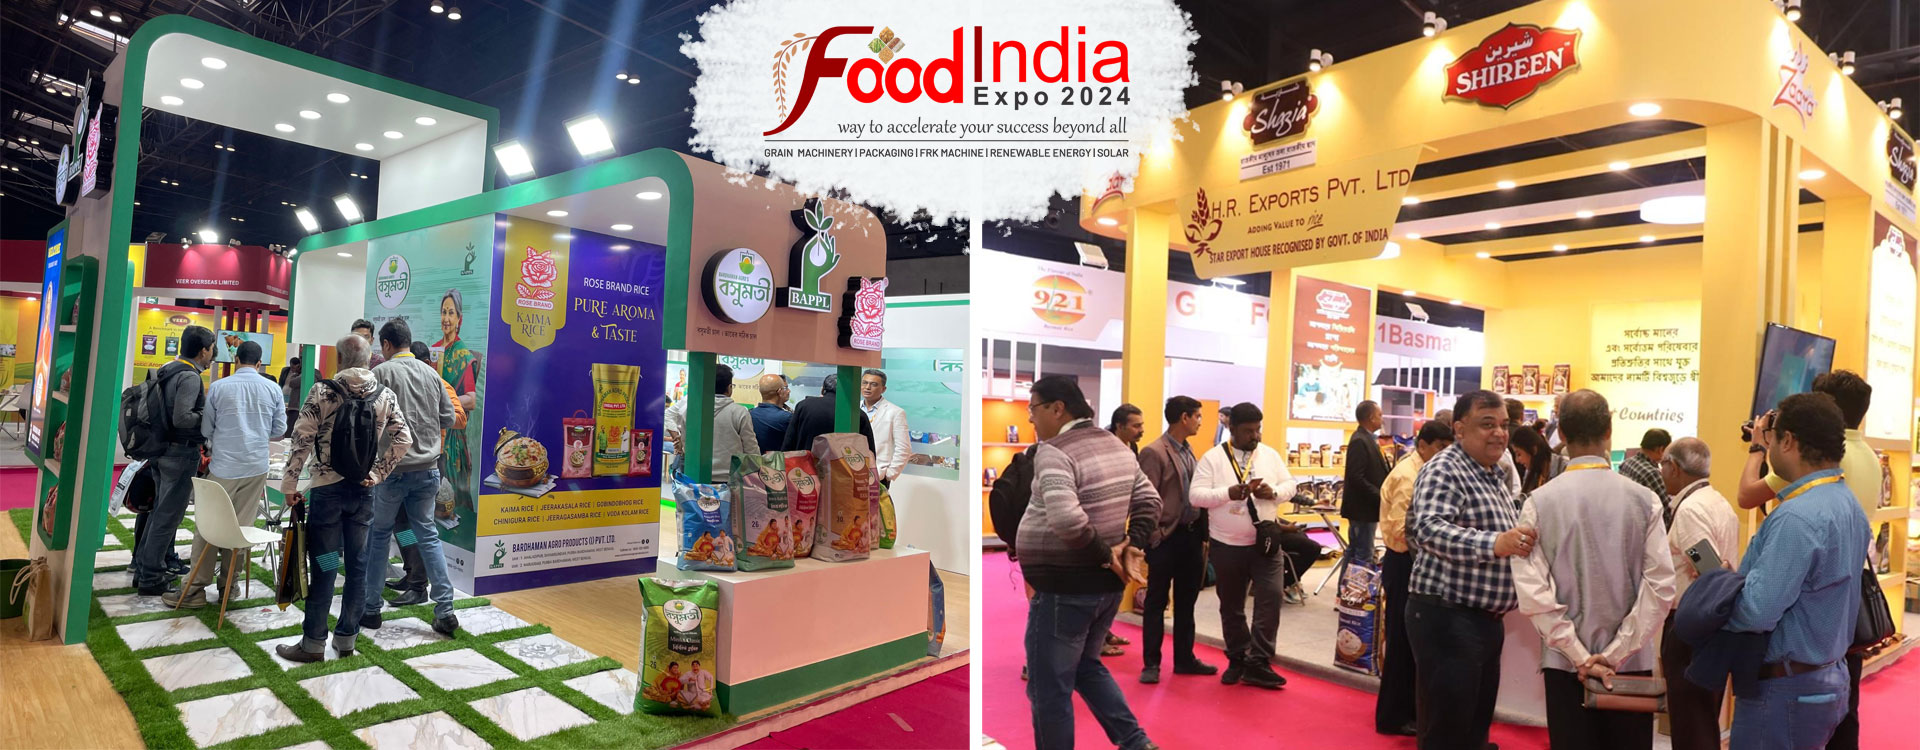 food india exhibition in delhi india